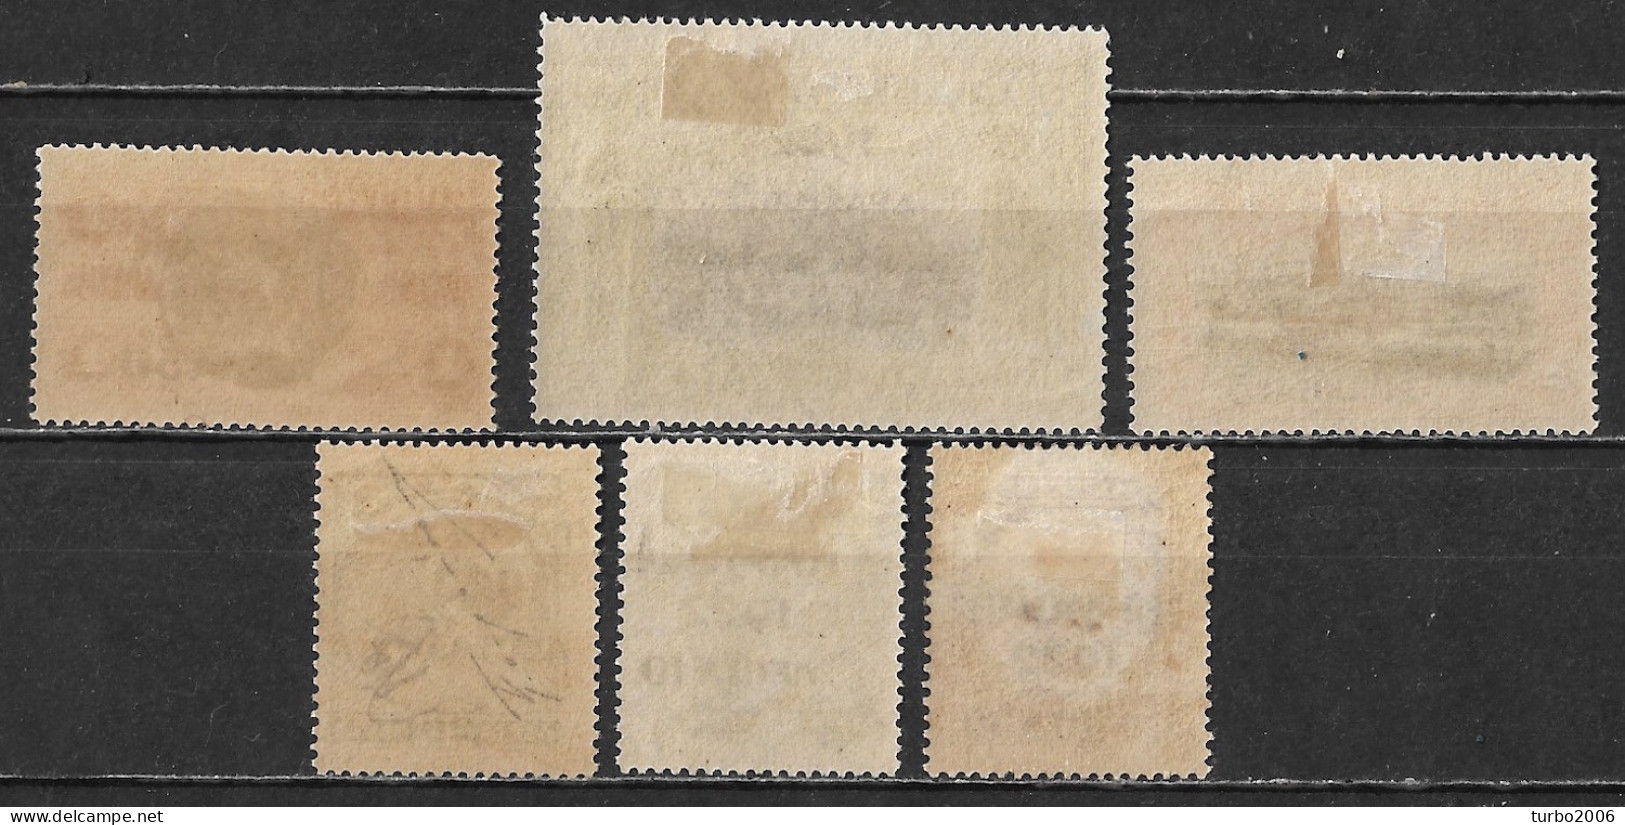 GREECE 1923 1922 Epanastasis Overprint On Cretan Stamps Of 1909 / 10 Complete MH Set Vl. 359 / 364 - Unused Stamps